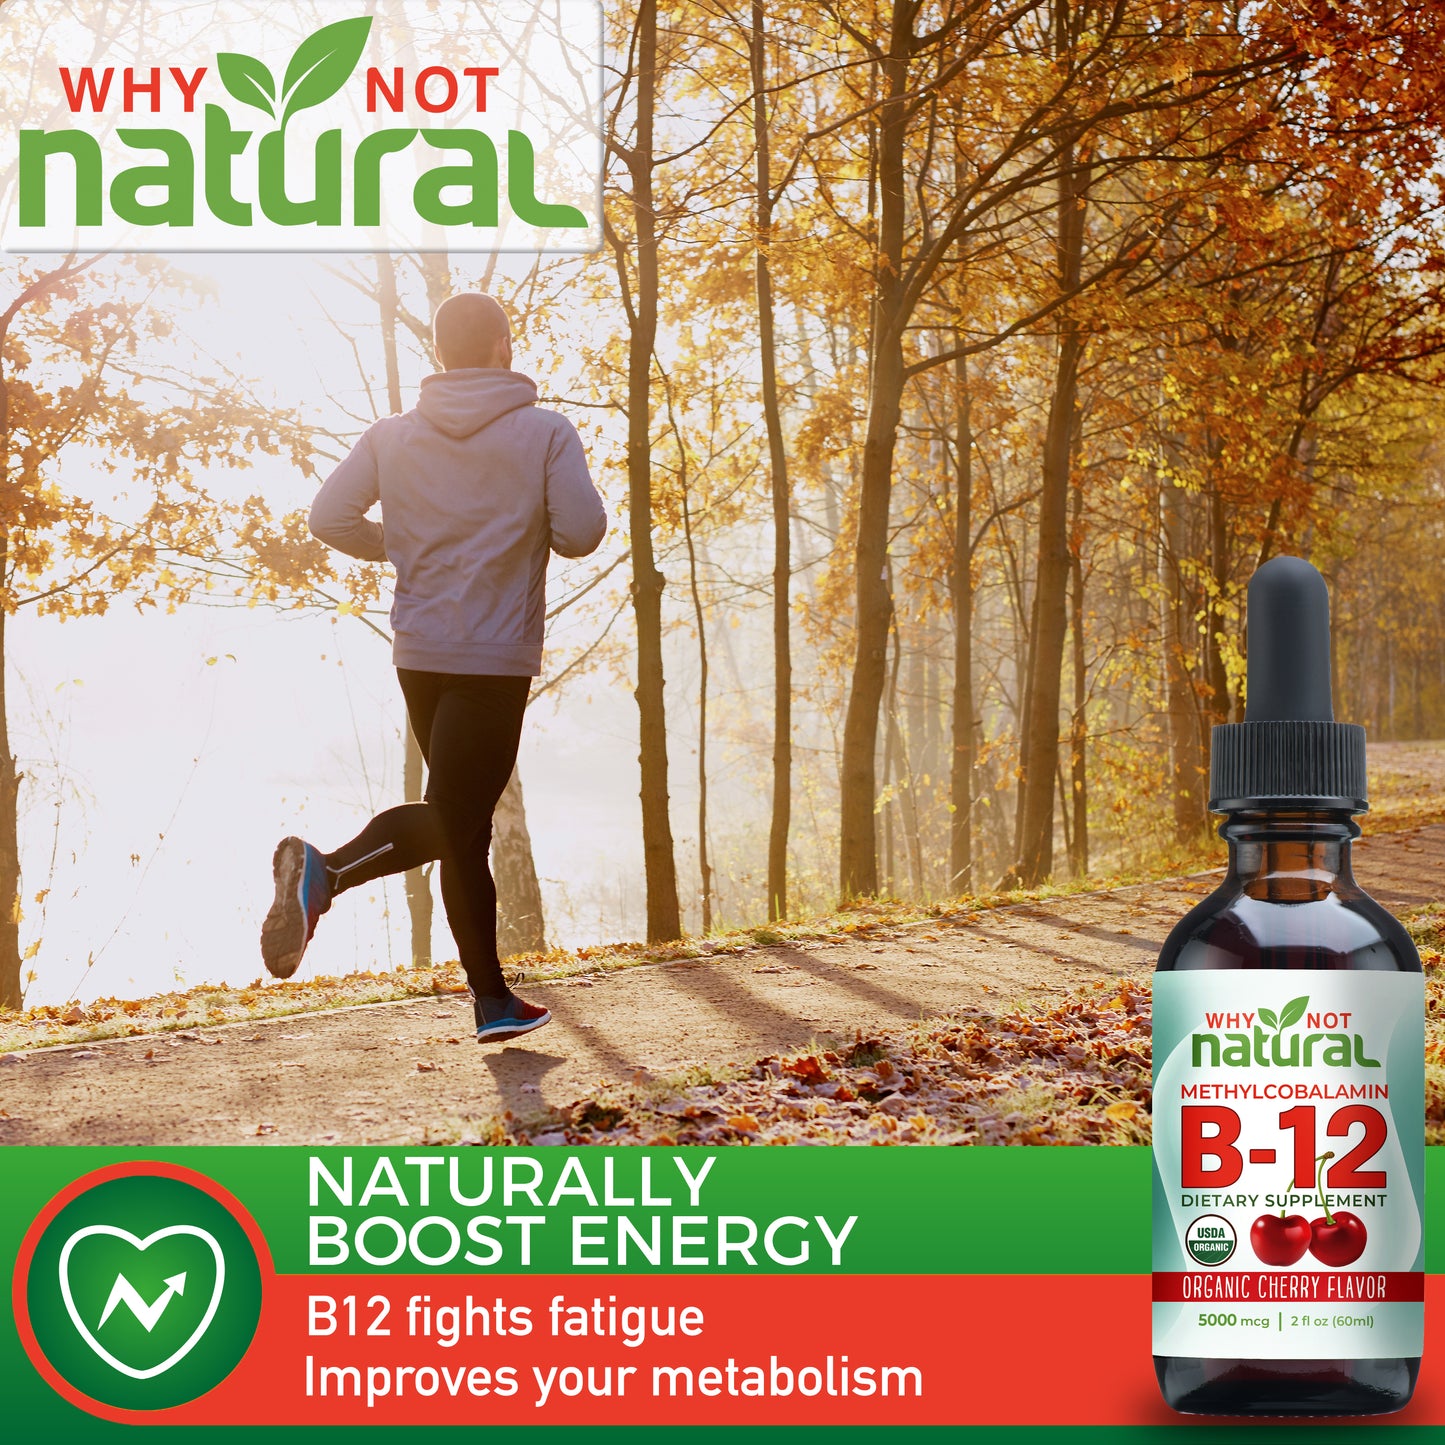 Organic Vitamin B12 Liquid Drops, Extra Strength 5000 mcg, Cherry or Unflavored